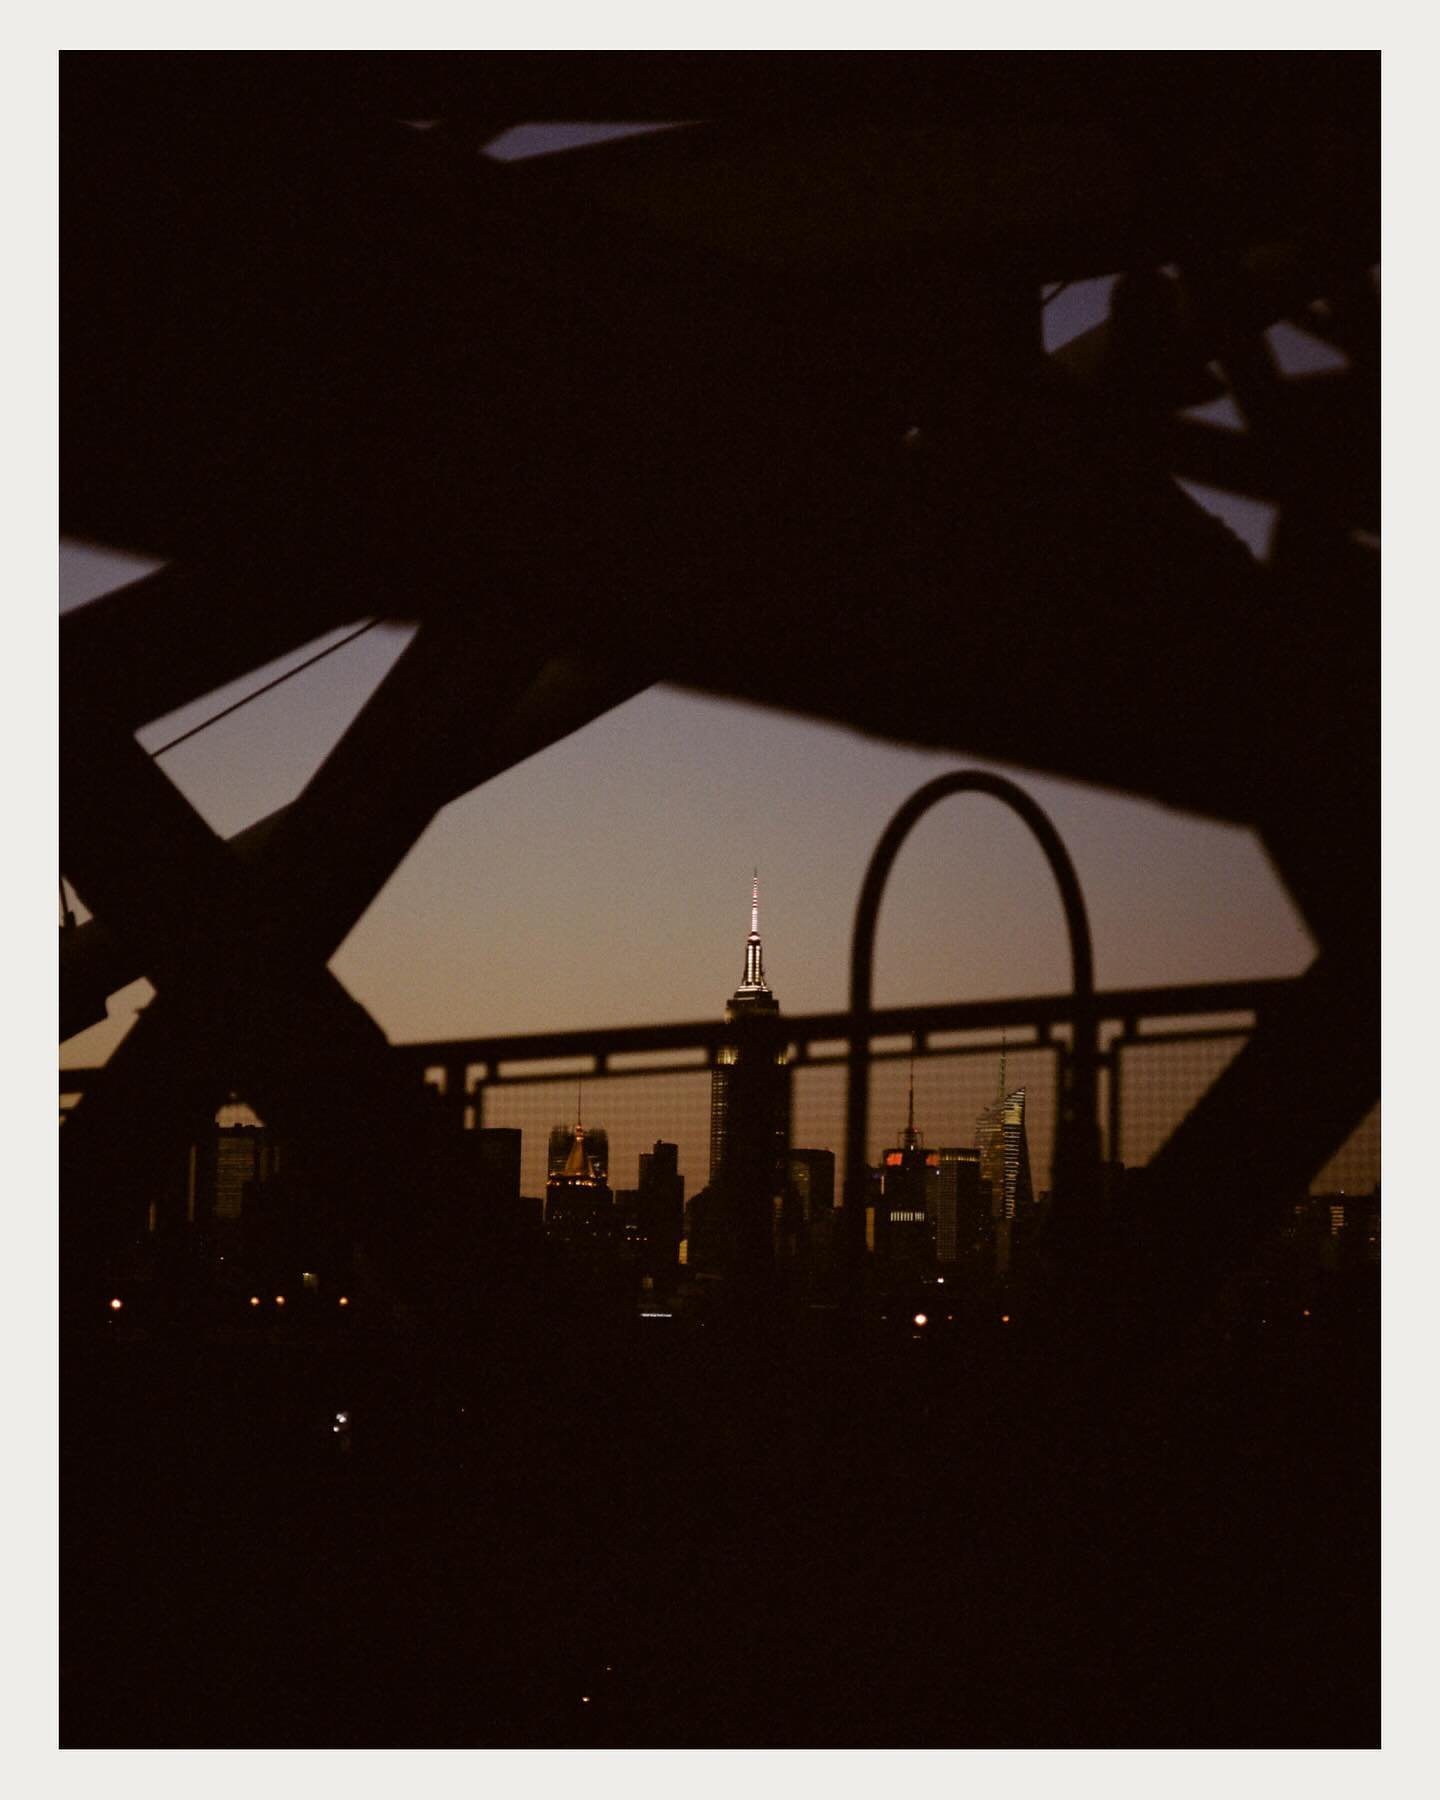 Views from the bridge

#NYC #filmphotography

#woofermagazine #filmclubglobal #socialghostmag #filmfridgemag5000 #summersunselection #melonmag #kodakprofessional #stademagazine #pastichethemag